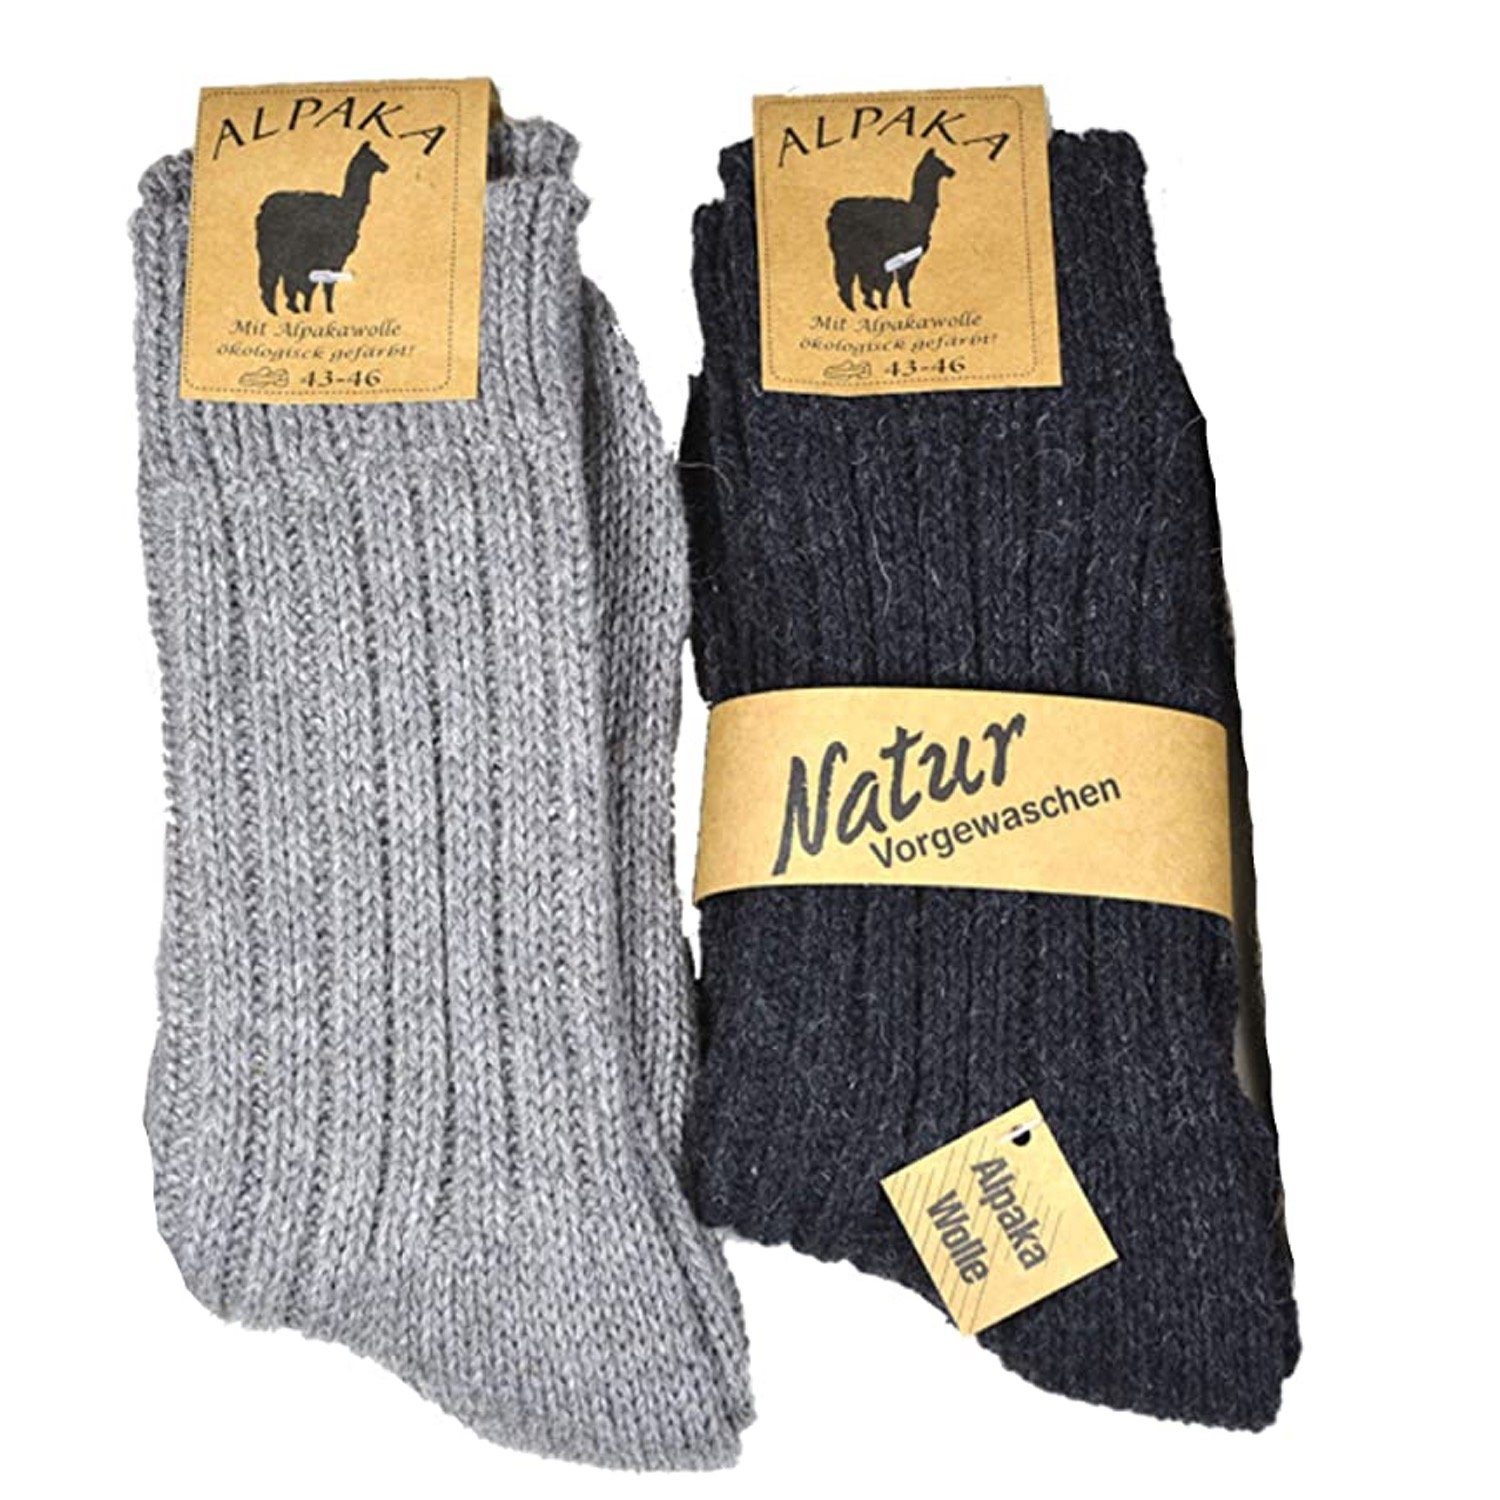 Alpaka Stricksocken selbst underwear Socken (2-Paar) gestrickt grau-schwarz wie Wollsocken Socken Cocain